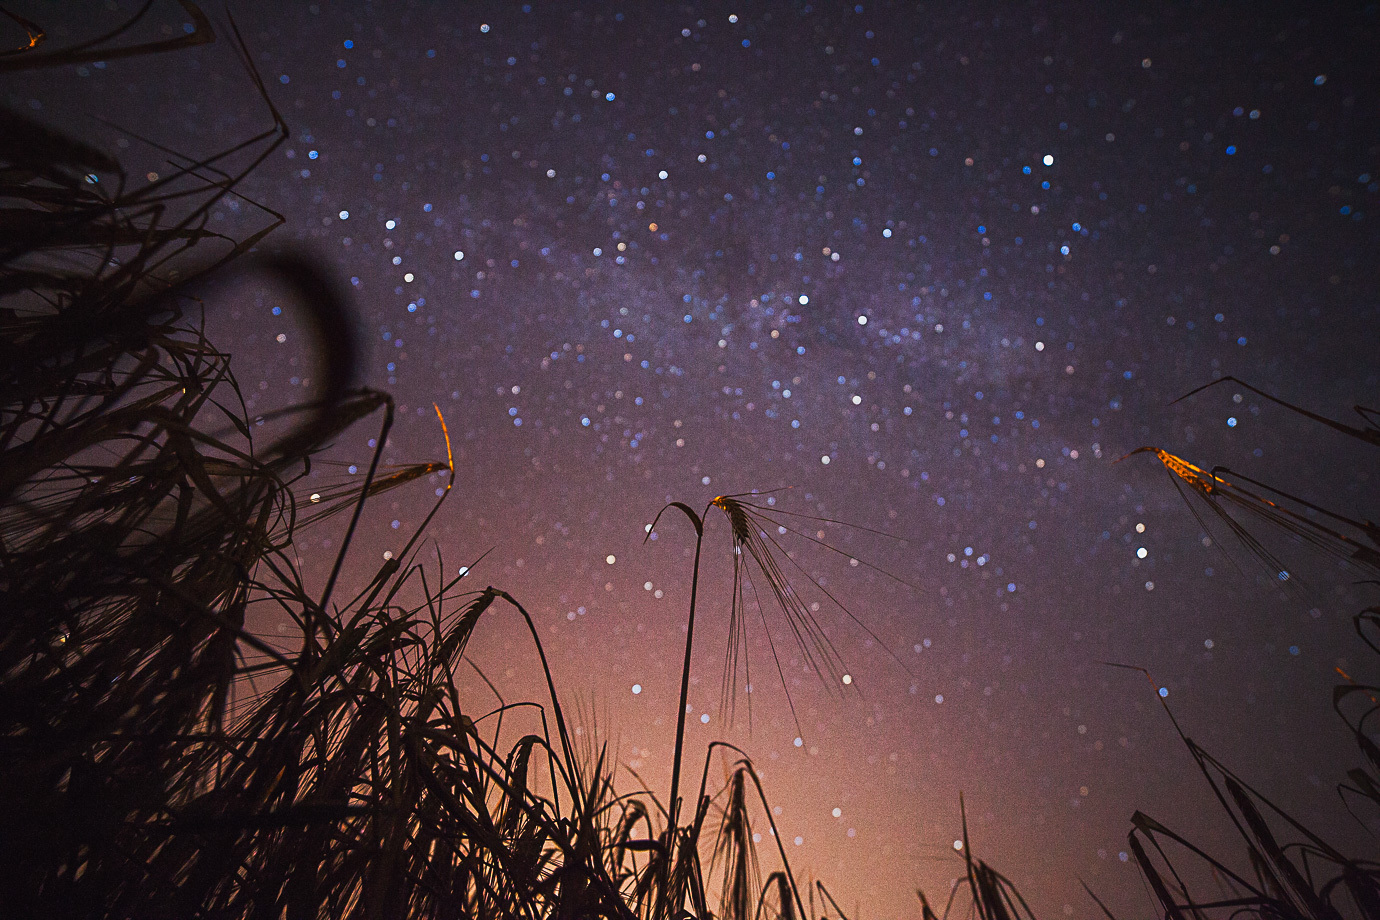 Произведение звездопад. Летняя ночь. Звездное небо. Звездное небо в поле. Летнее ночное небо.